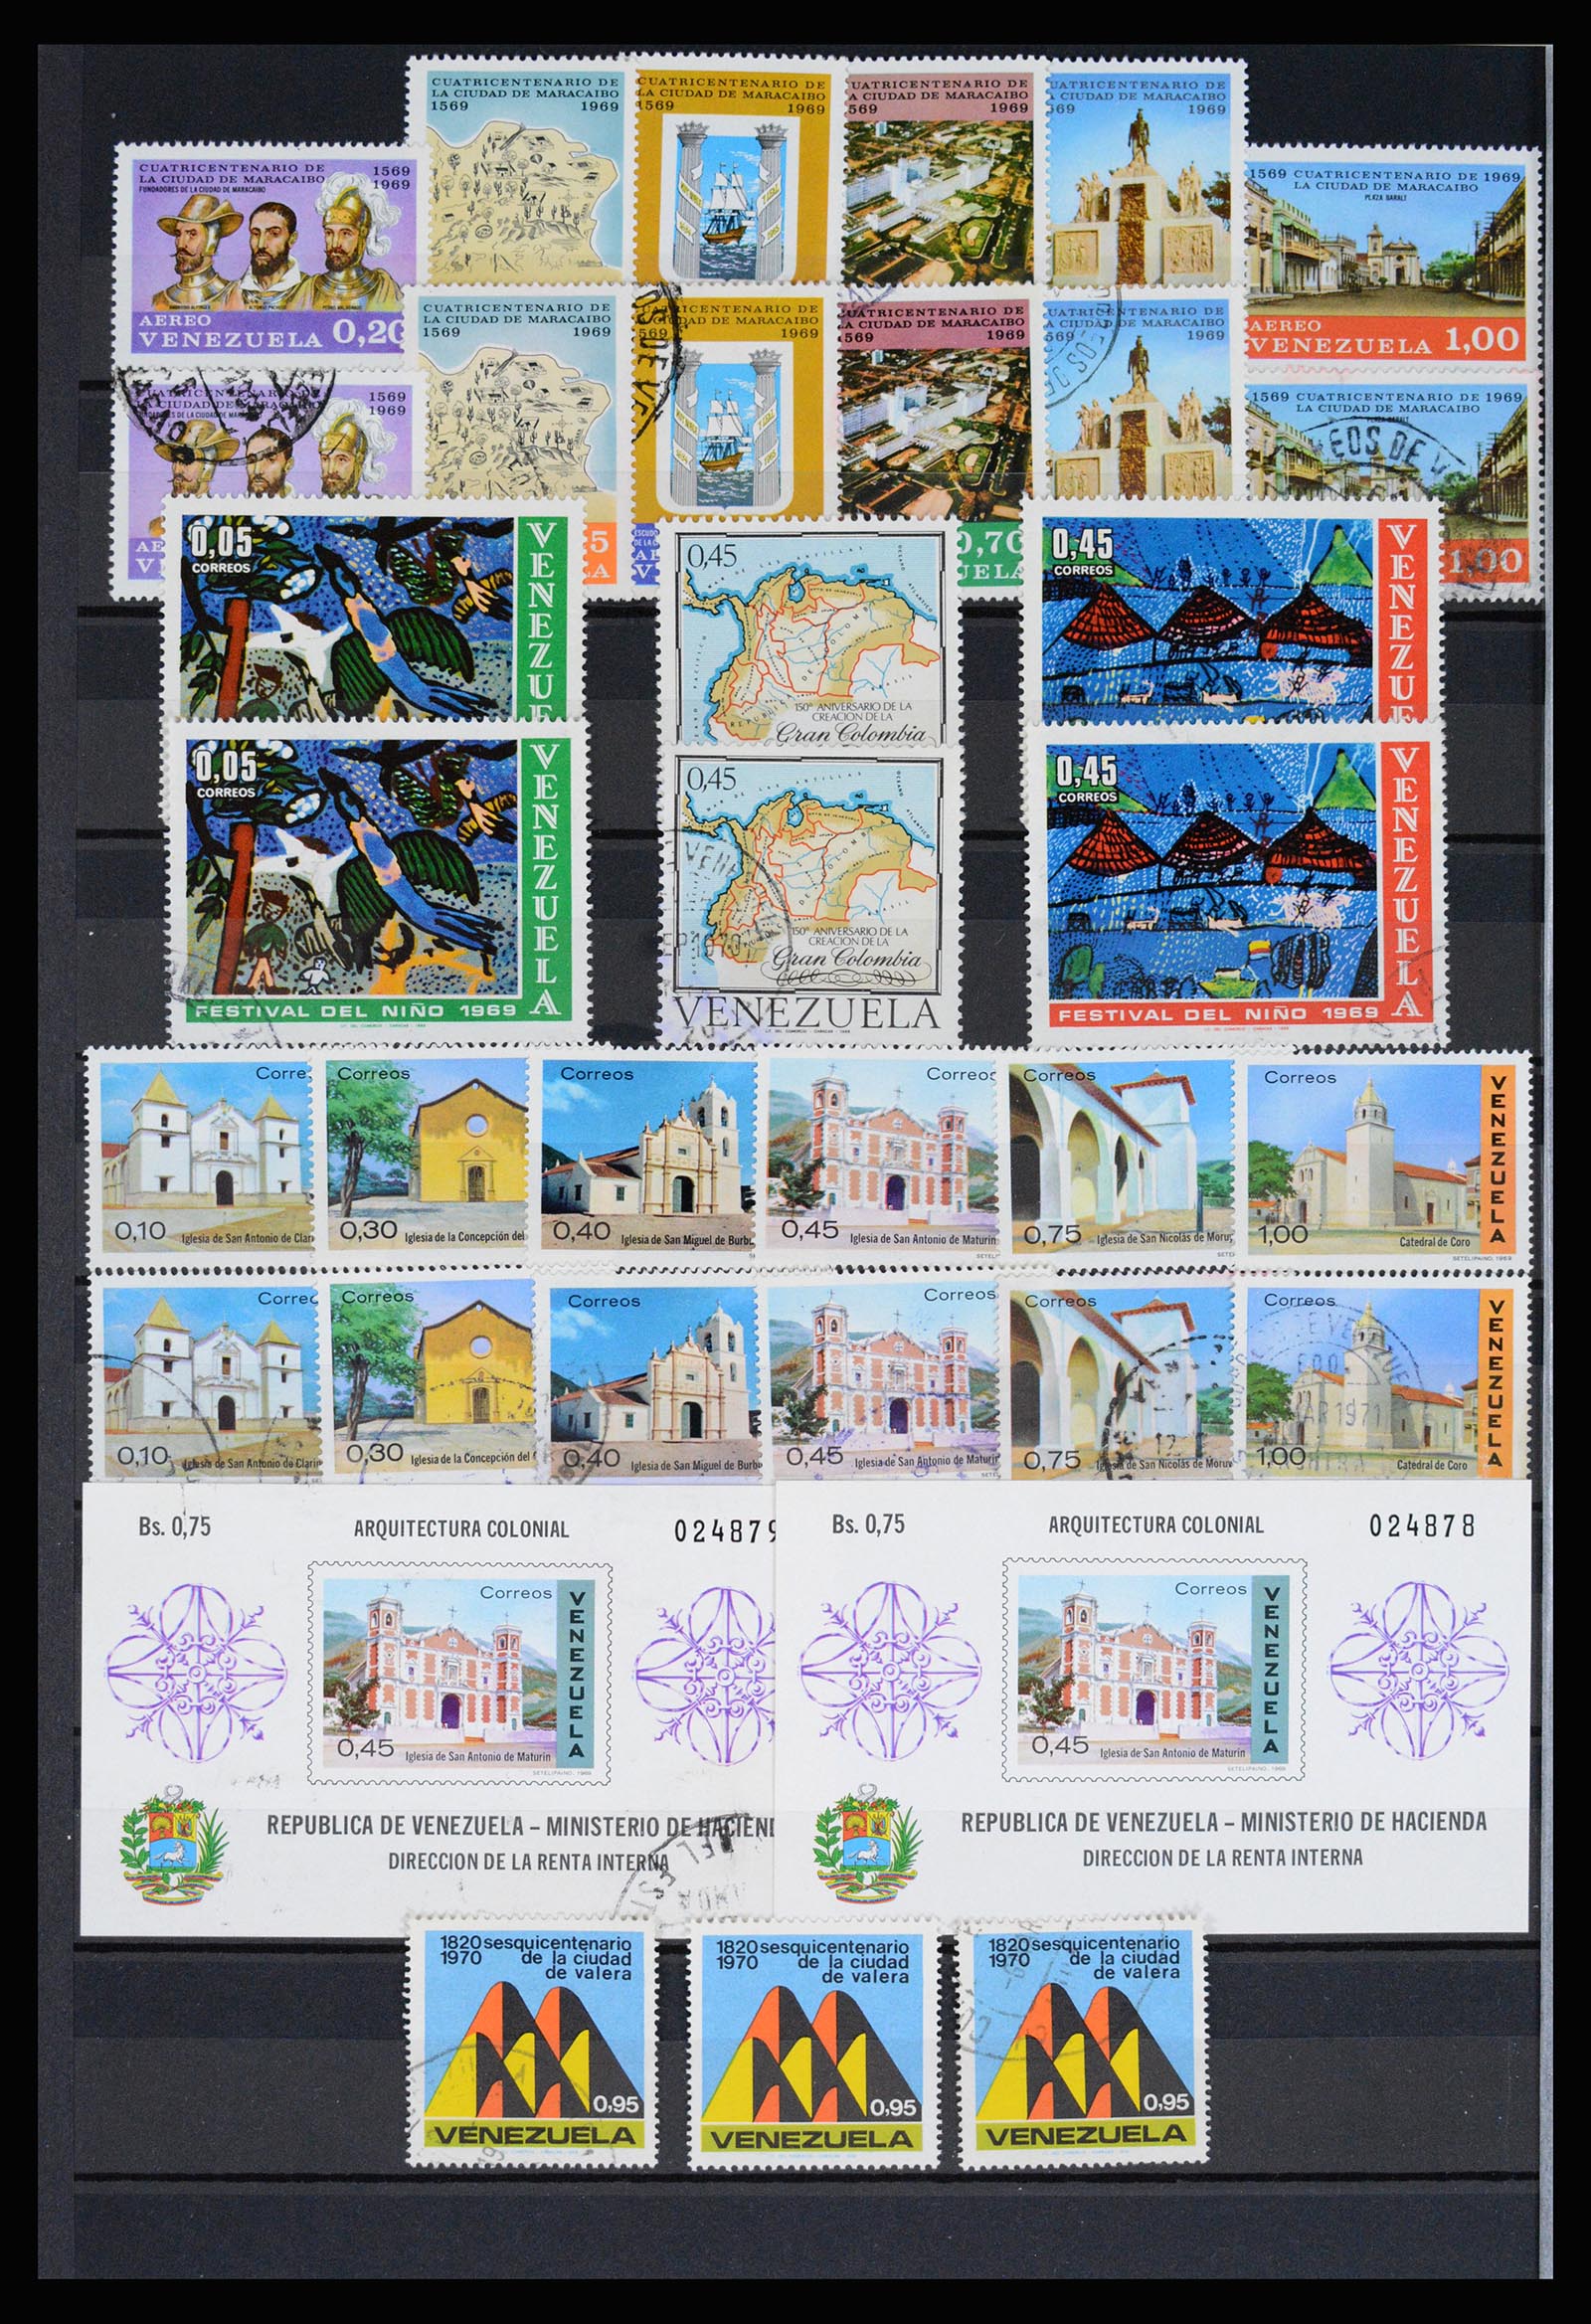 36987 057 - Stamp collection 36987 Venezuela 1860-1995.